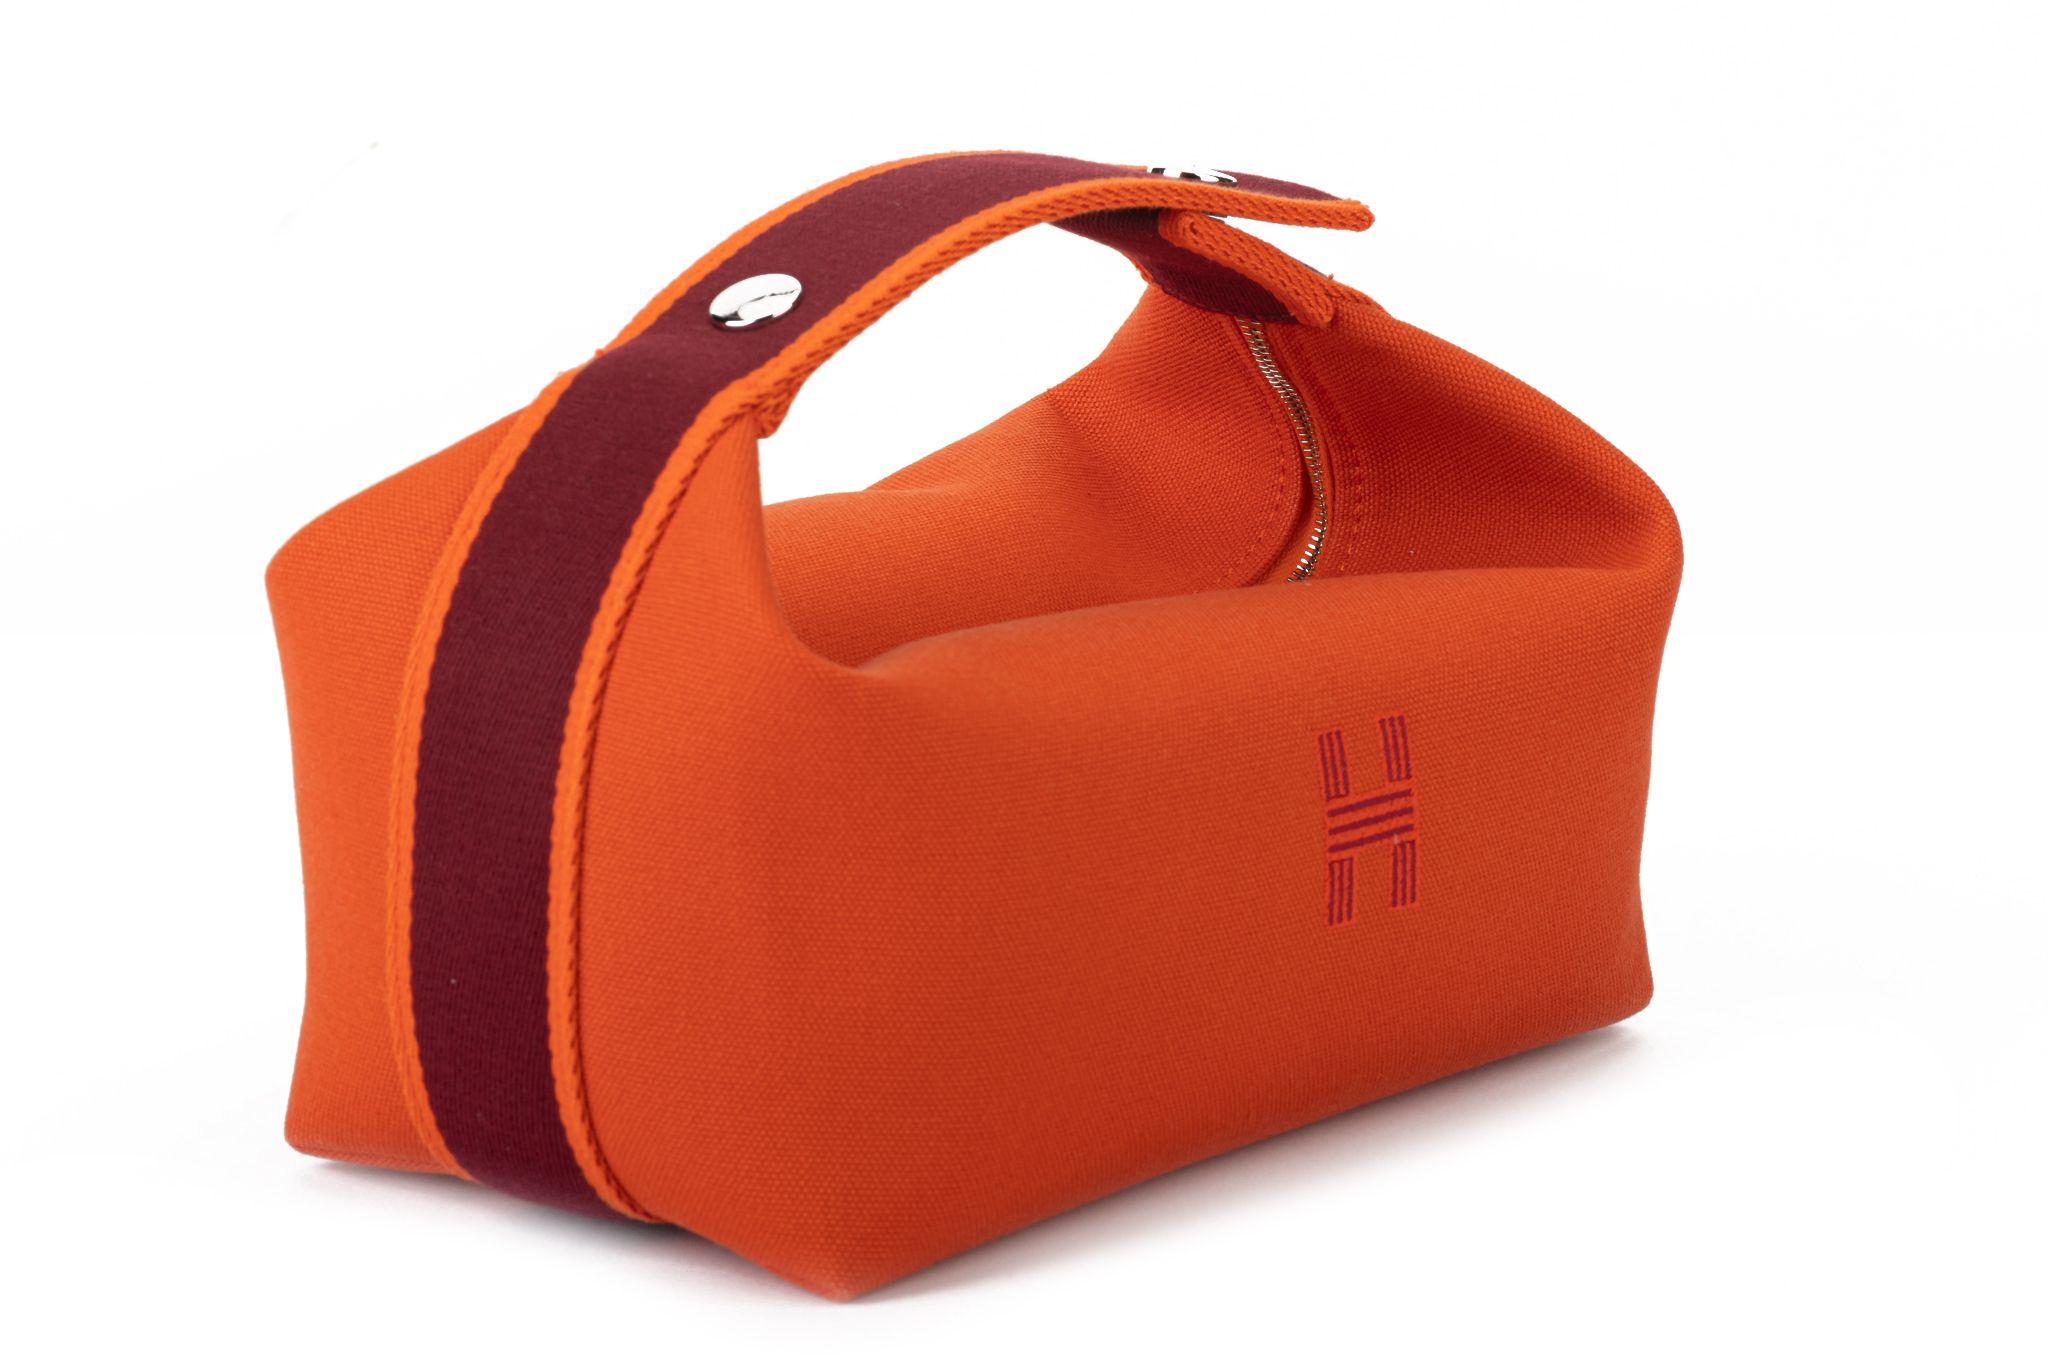 Hermès new orange bride-a-brac canvas toile case. Comes with original orange box.